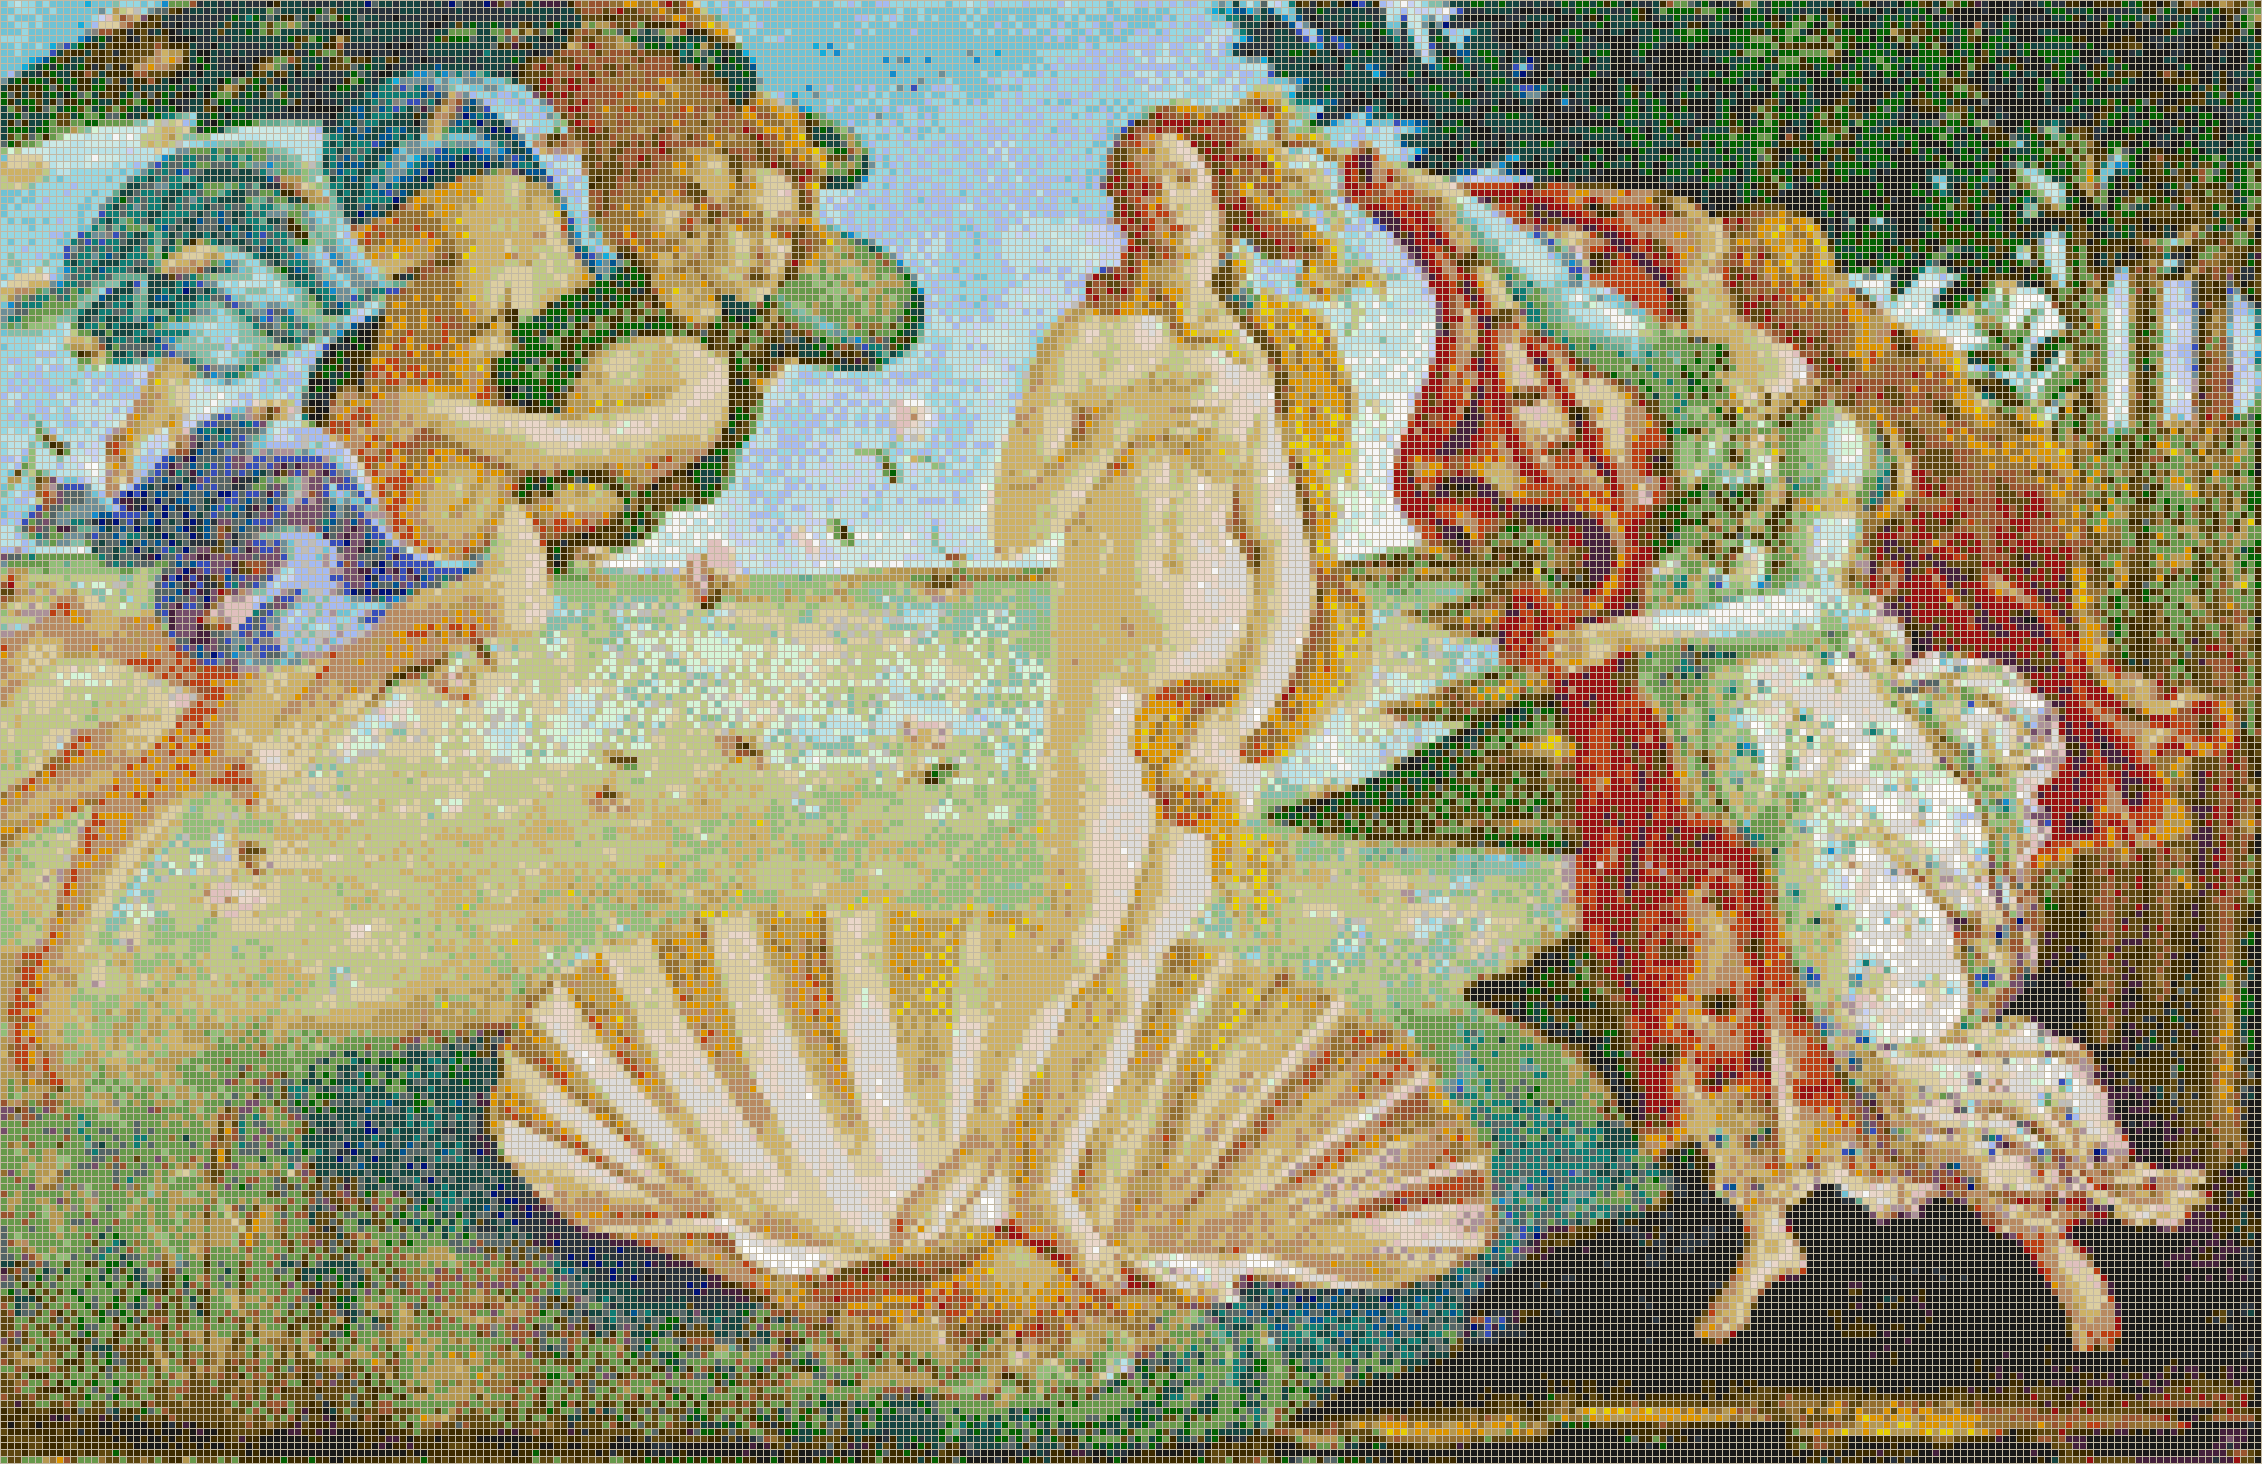 The Birth of Venus (Botticelli) - Mosaic Tile Art